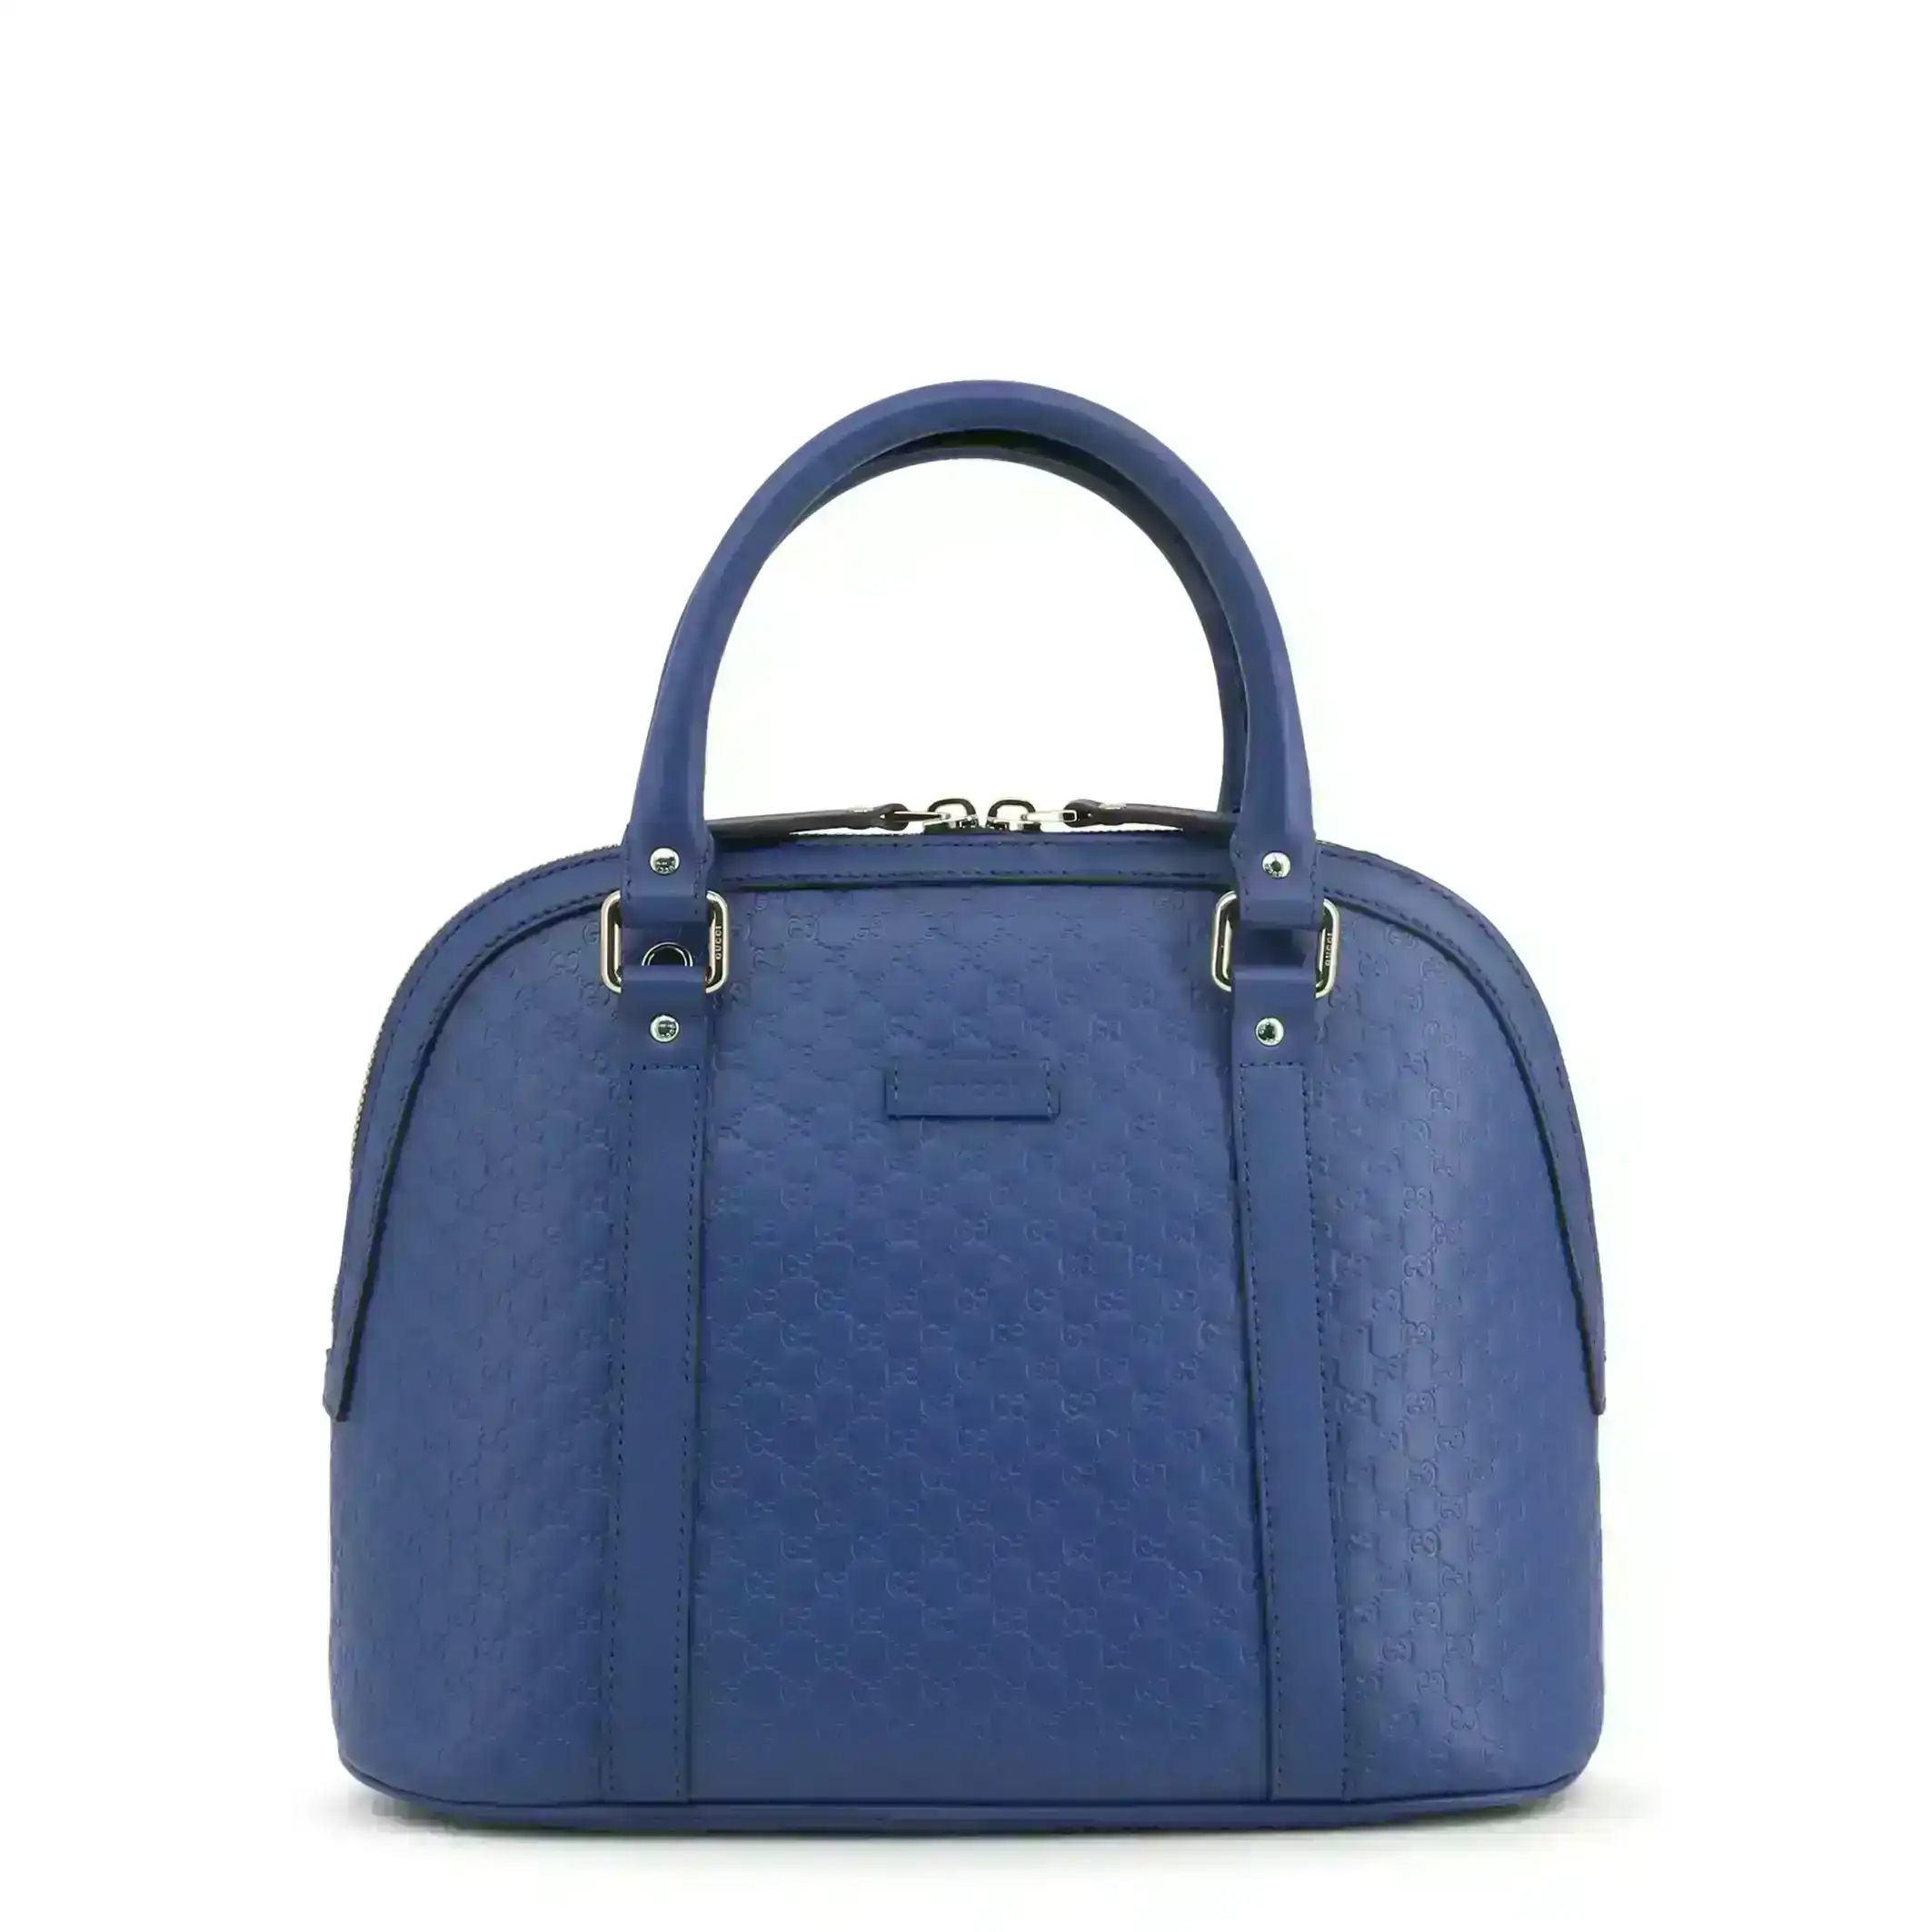 Gucci Women's Handbag